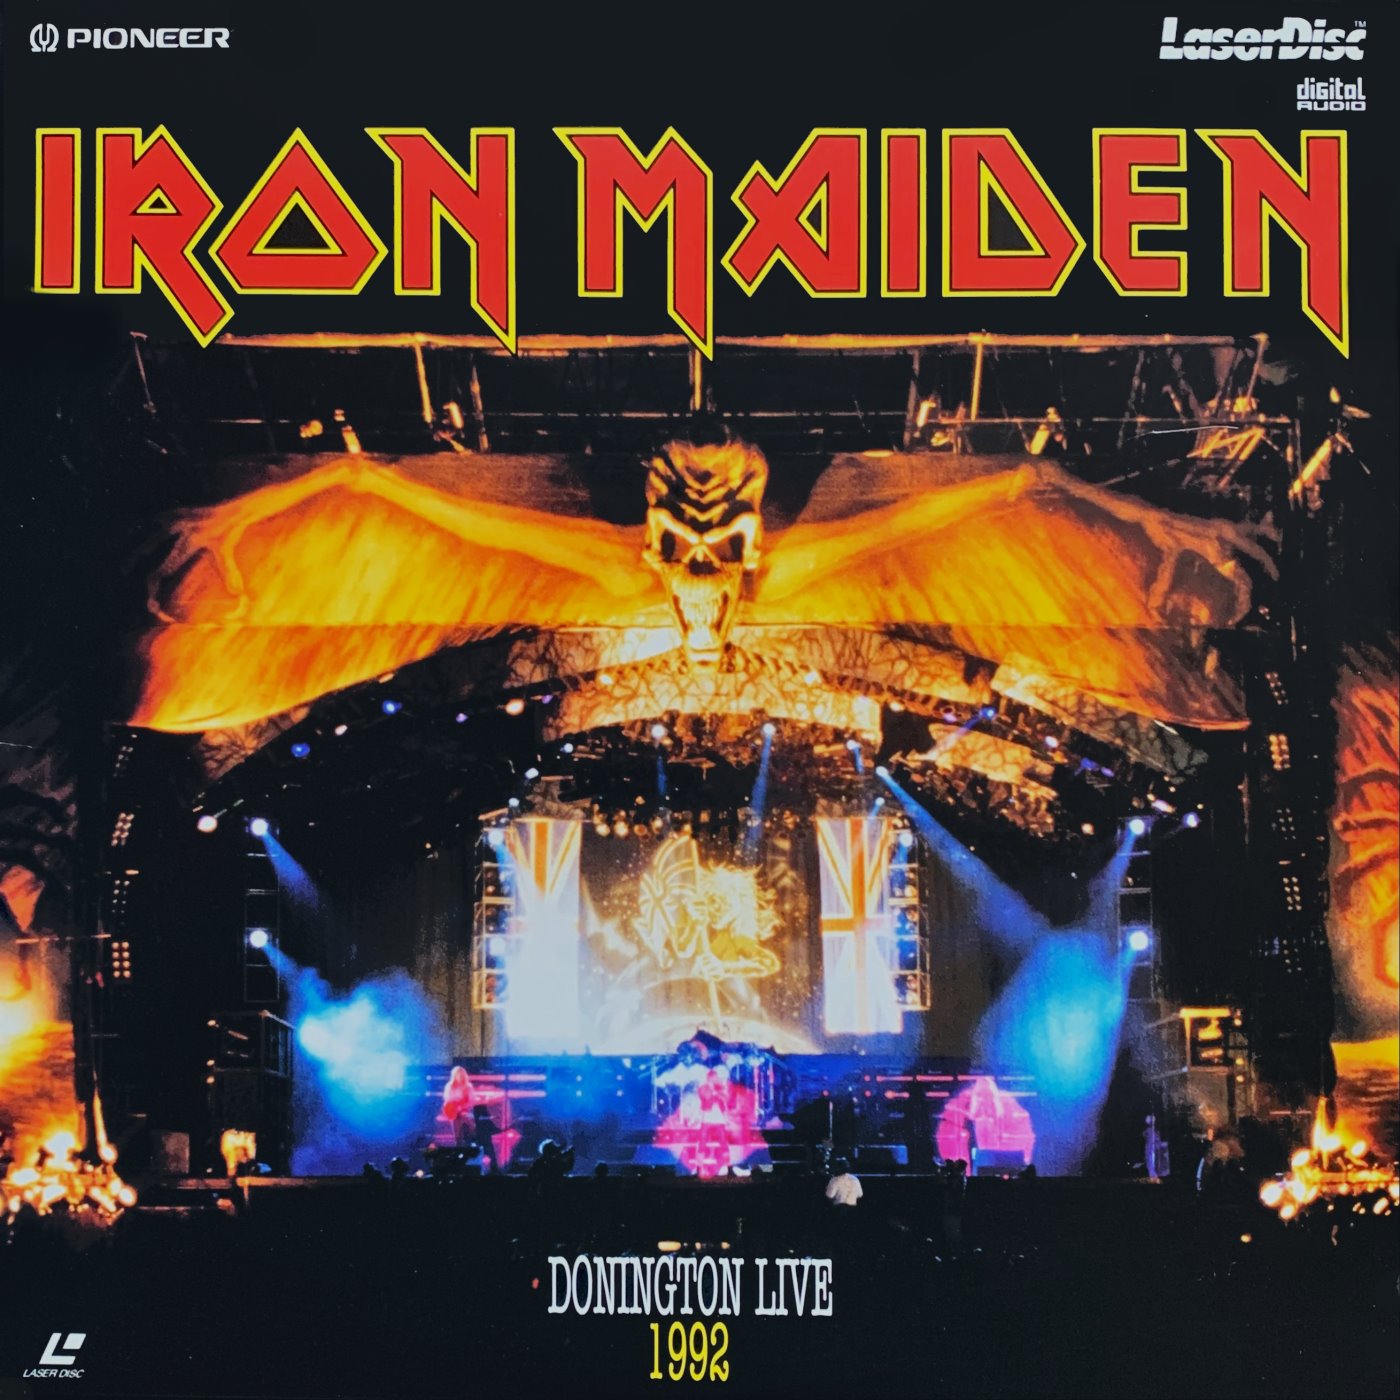 Cover - Iron Maiden - Donington Live 1992.jpg